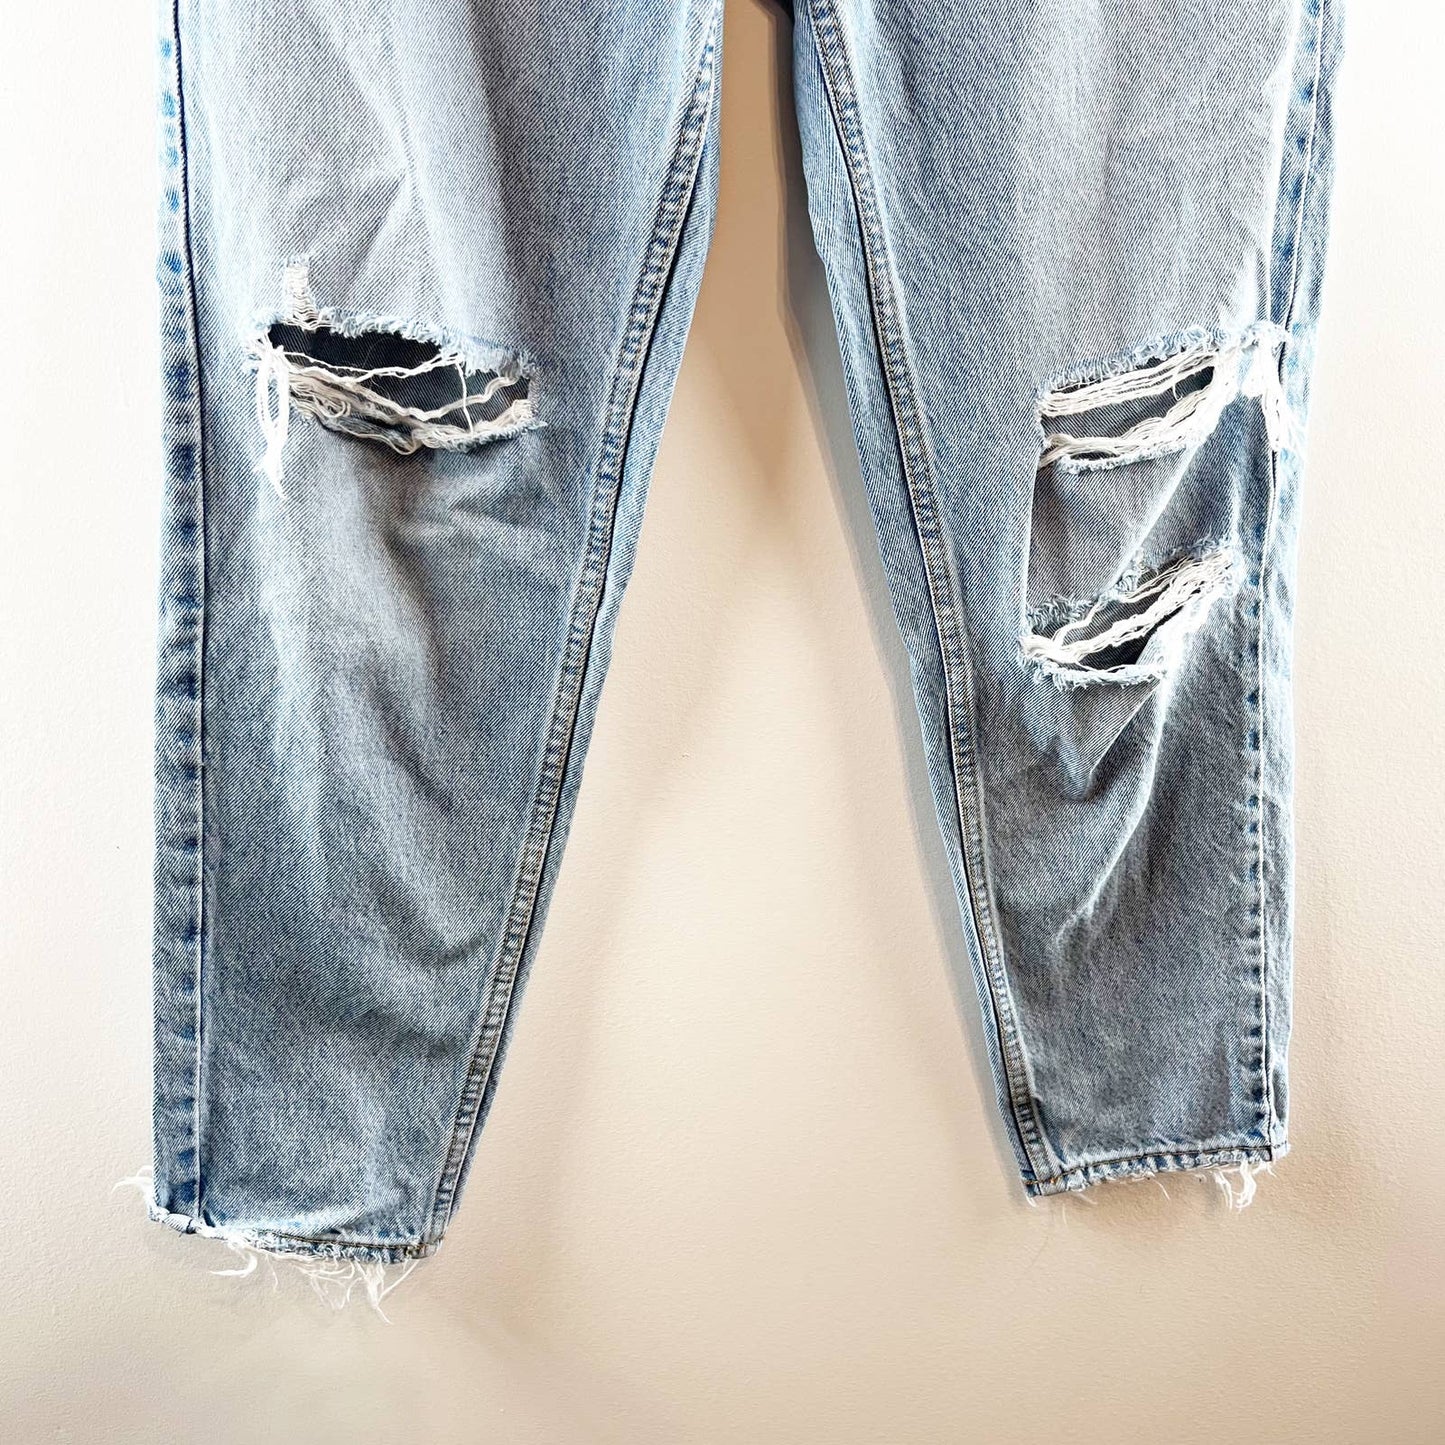 Zara High Rise Raw-Hem Cotton Ripped Distressed Mom Jeans Light Blue 8